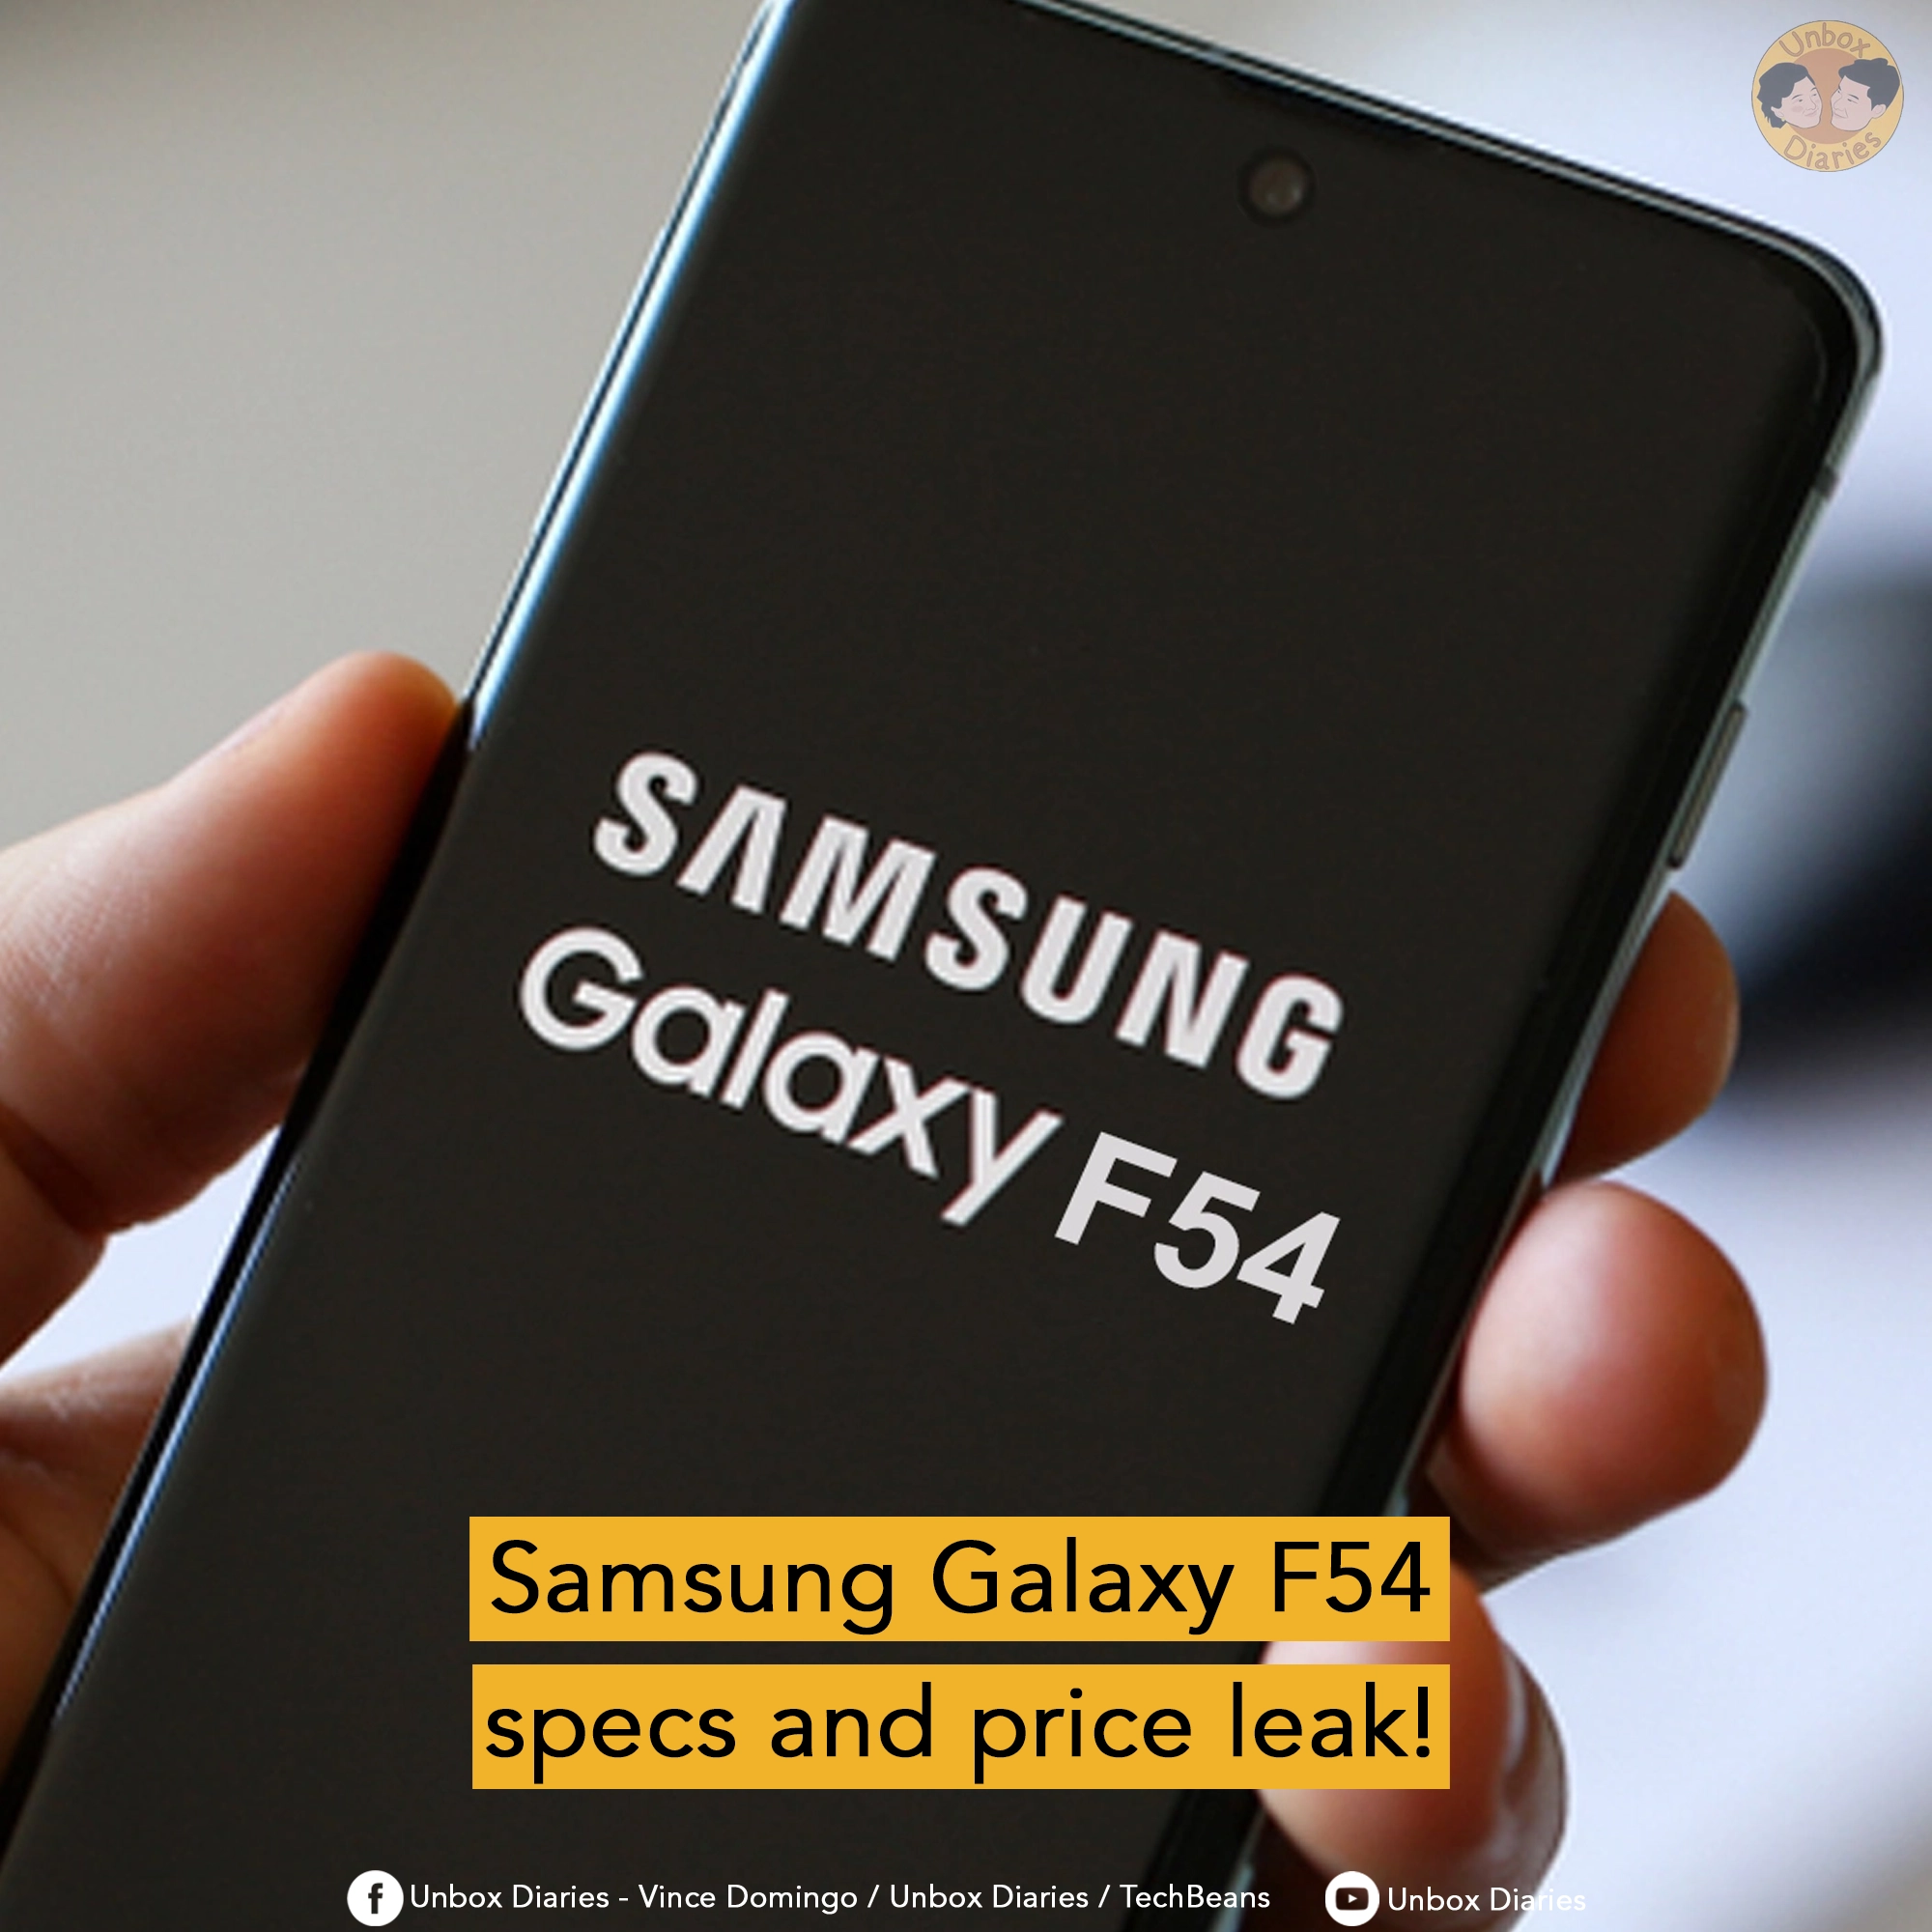 Samsung Galaxy F54 specs and price leak!